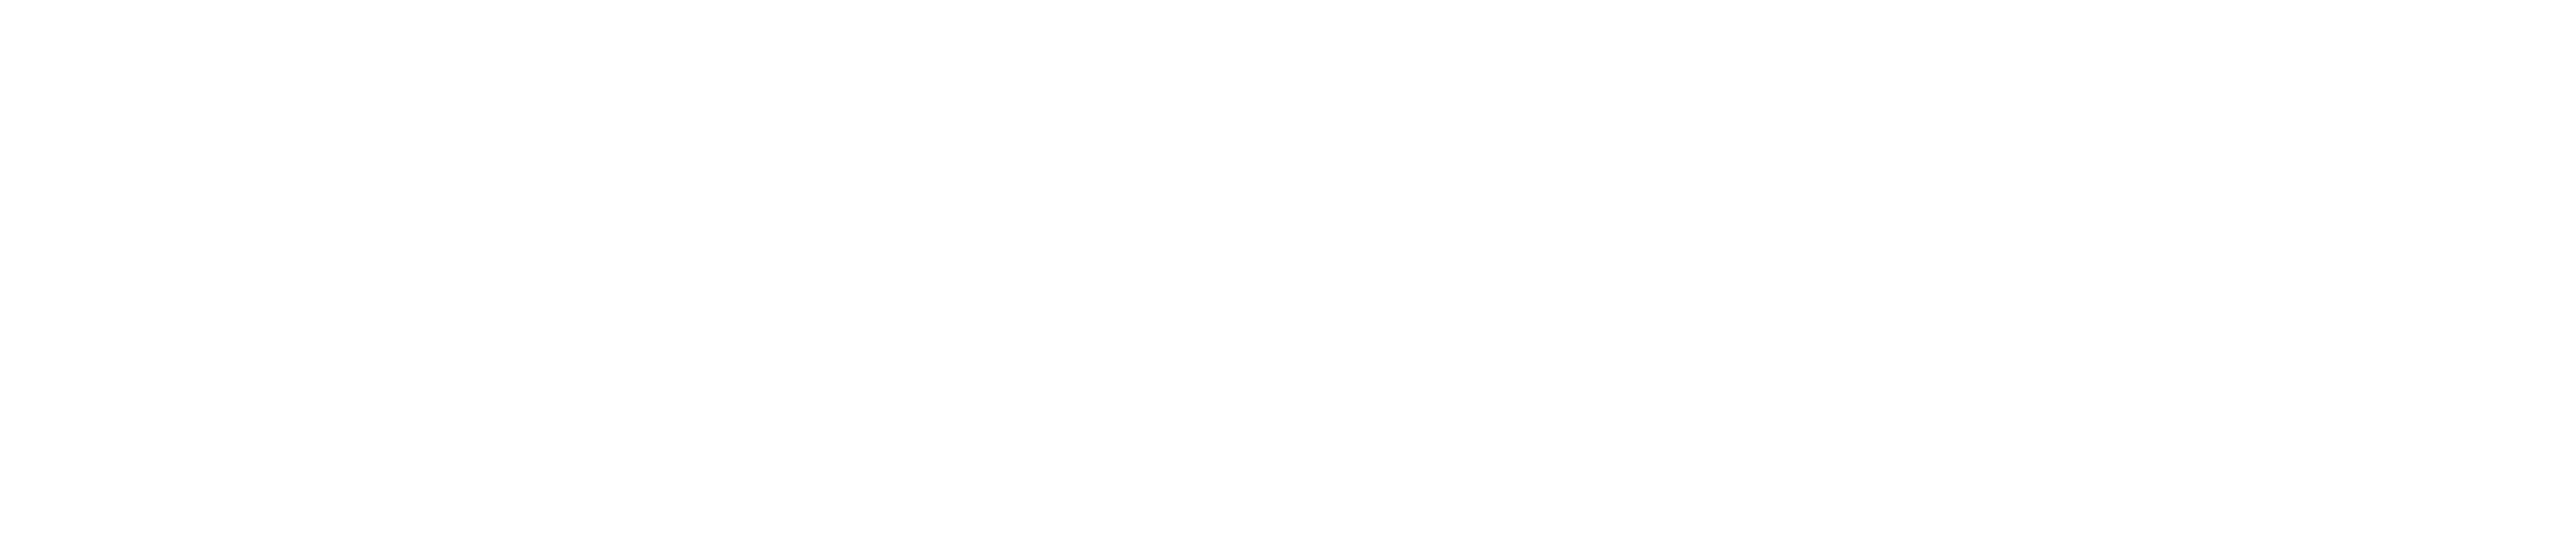 Assembly Online 2020 logo